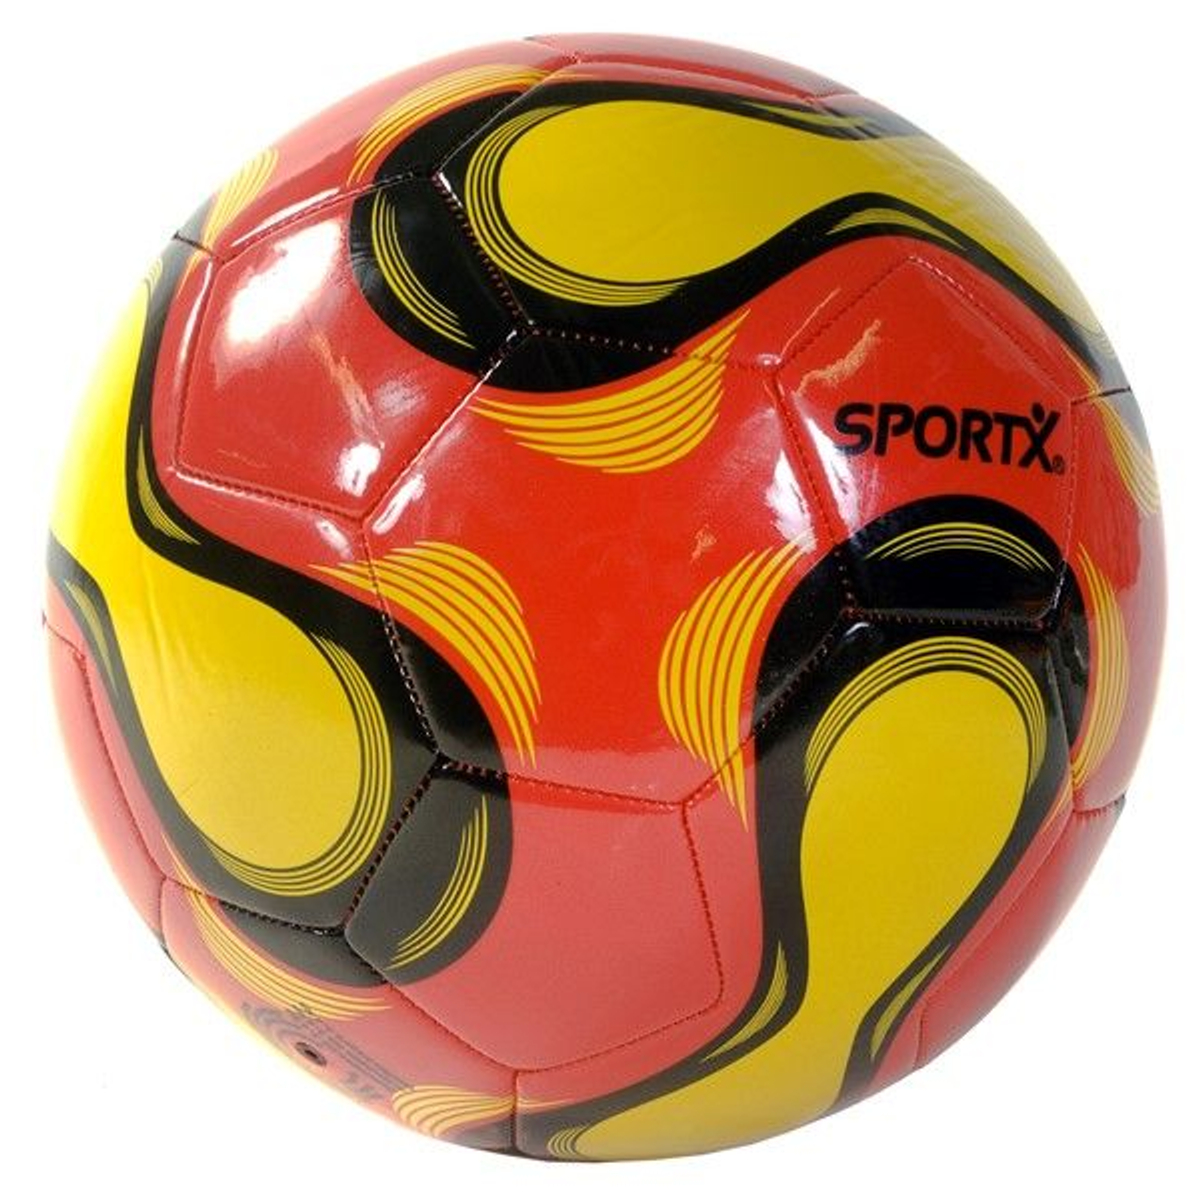 Sportx Voetbal België